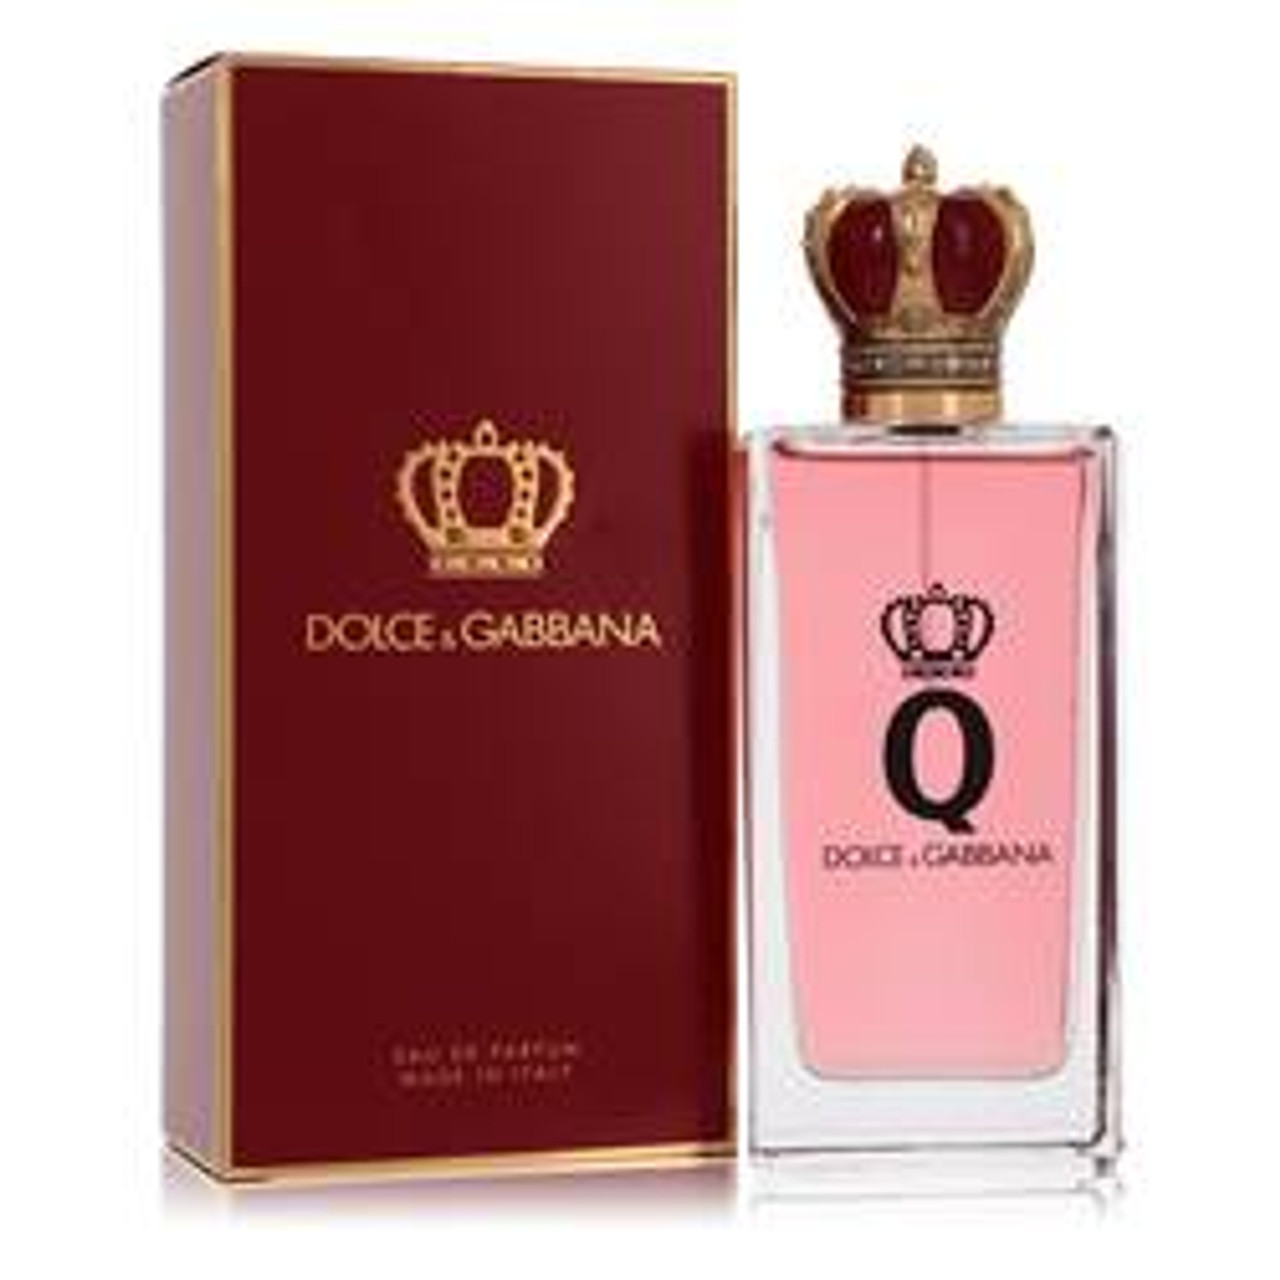 Q By Dolce & Gabbana Perfume By Dolce & Gabbana Eau De Parfum Spray 3.3 oz for Women - *Pre-Order